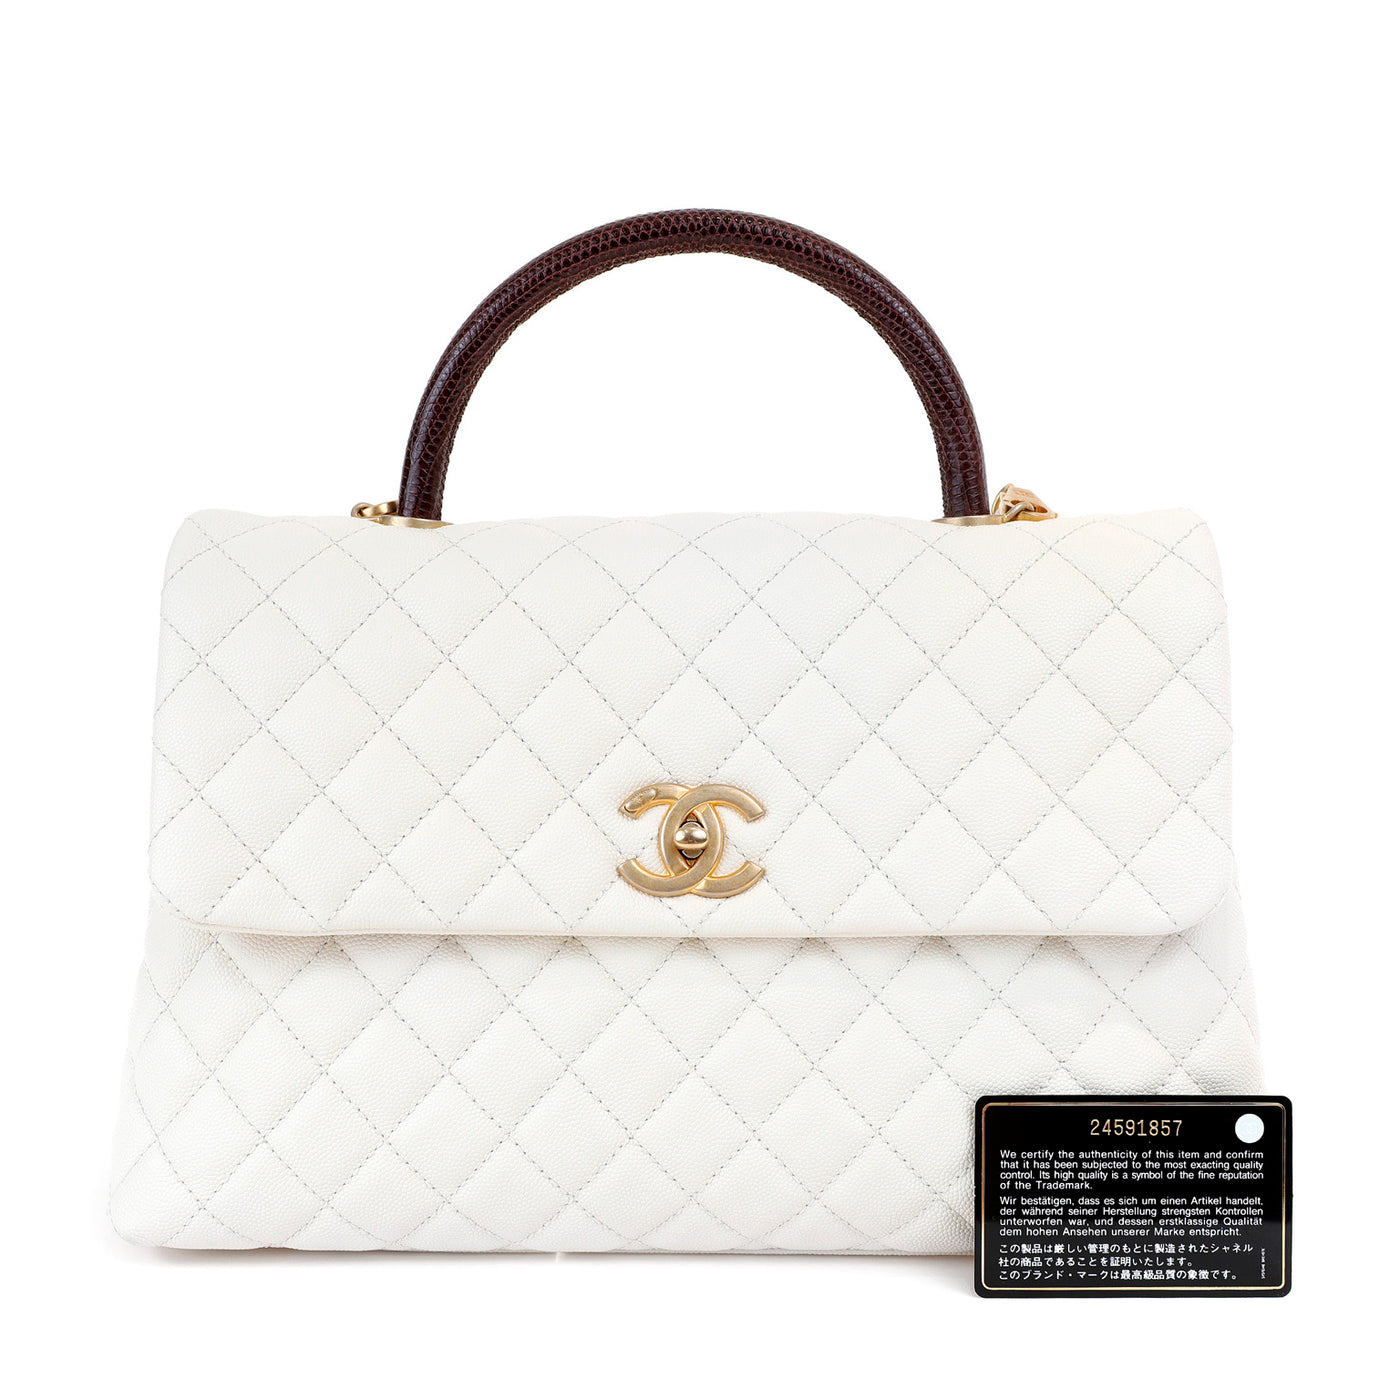 Chanel White Caviar Coco Bag w/ Lizard Skin Handle & Gold Hardware